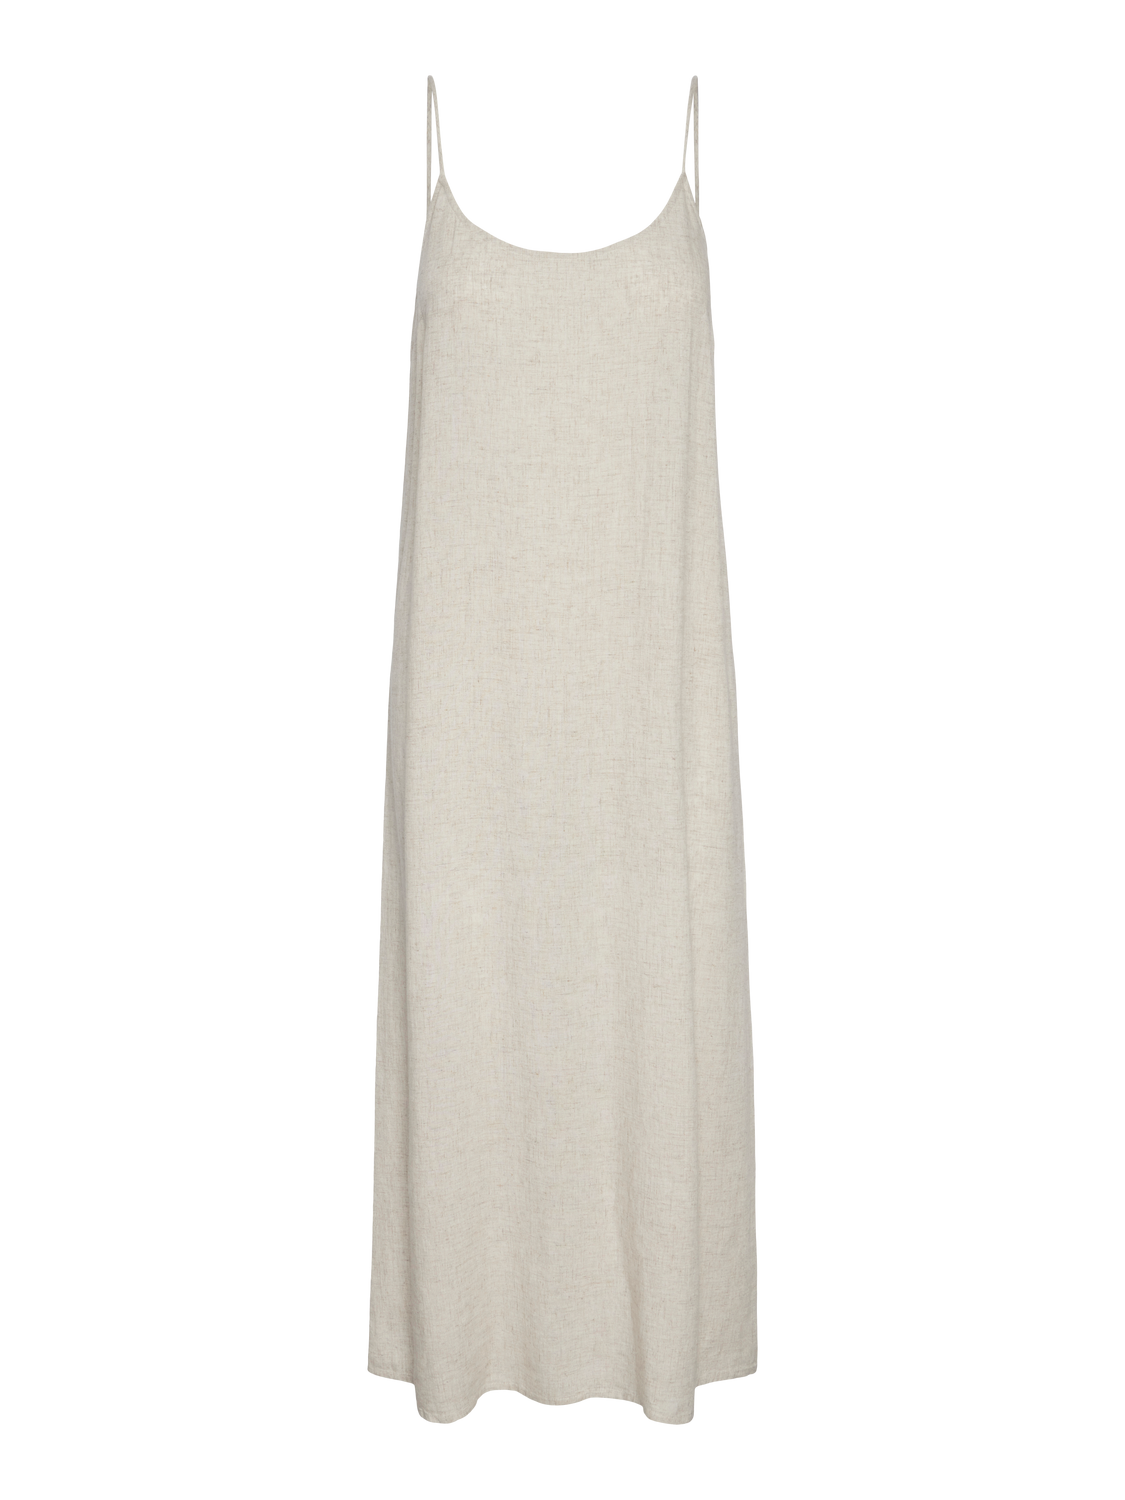 PCPIA Dress - Sandshell